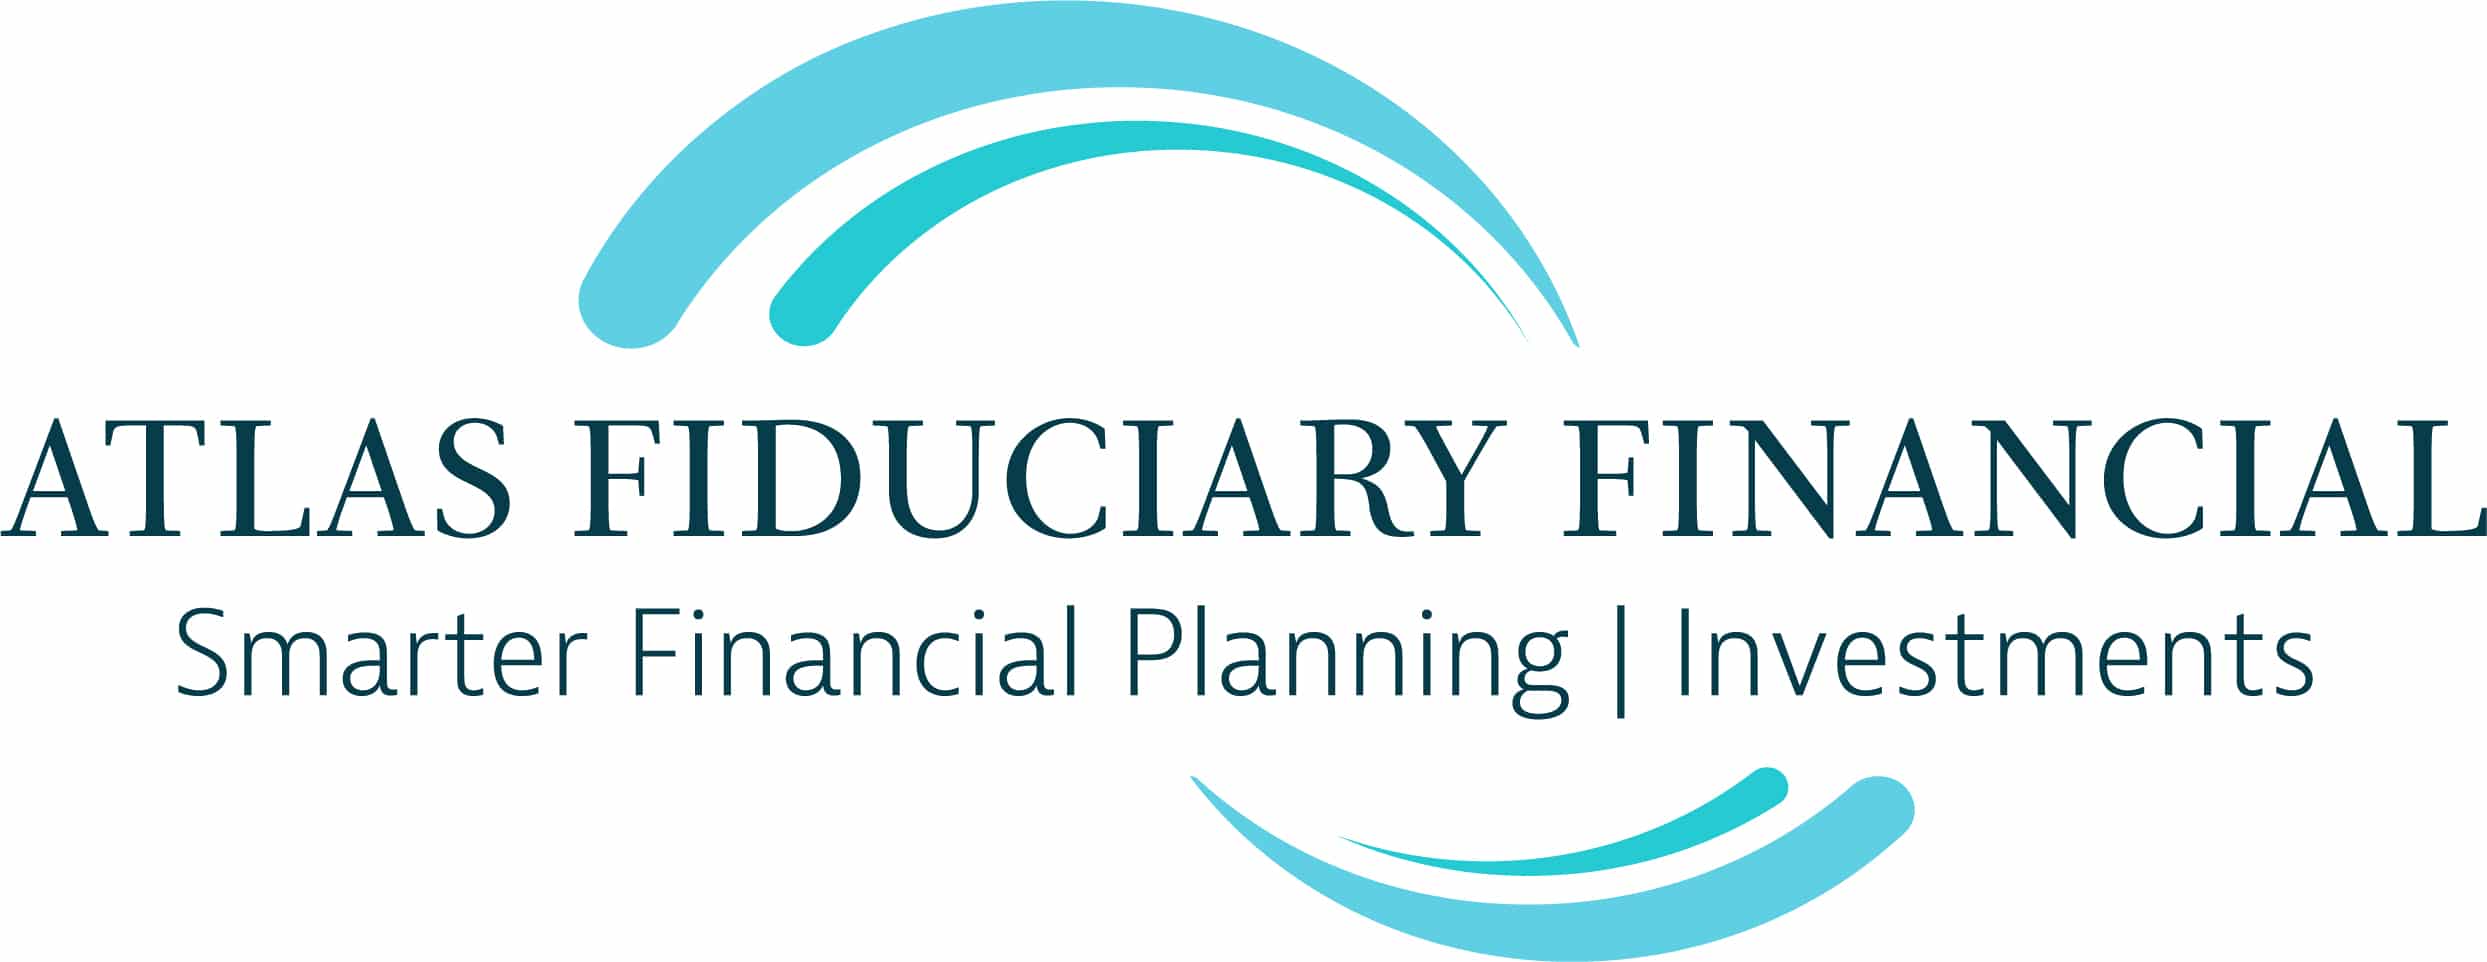 Atlas Fiduciary Financial LLC - Fee-Only Financial Advisor in Sarasota, FL and Northern NJ